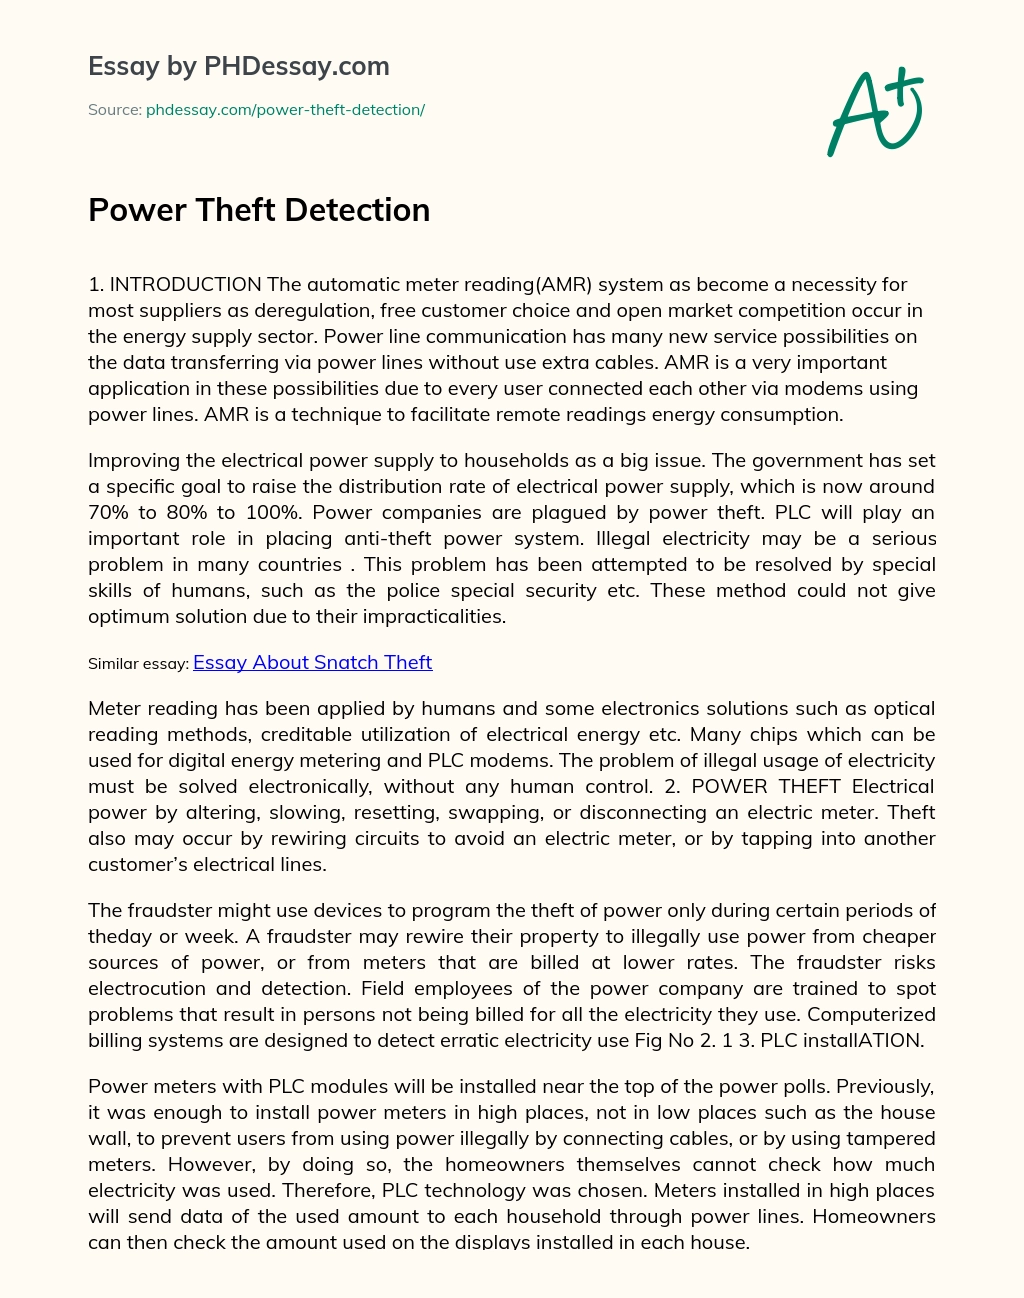 Power Theft Detection essay